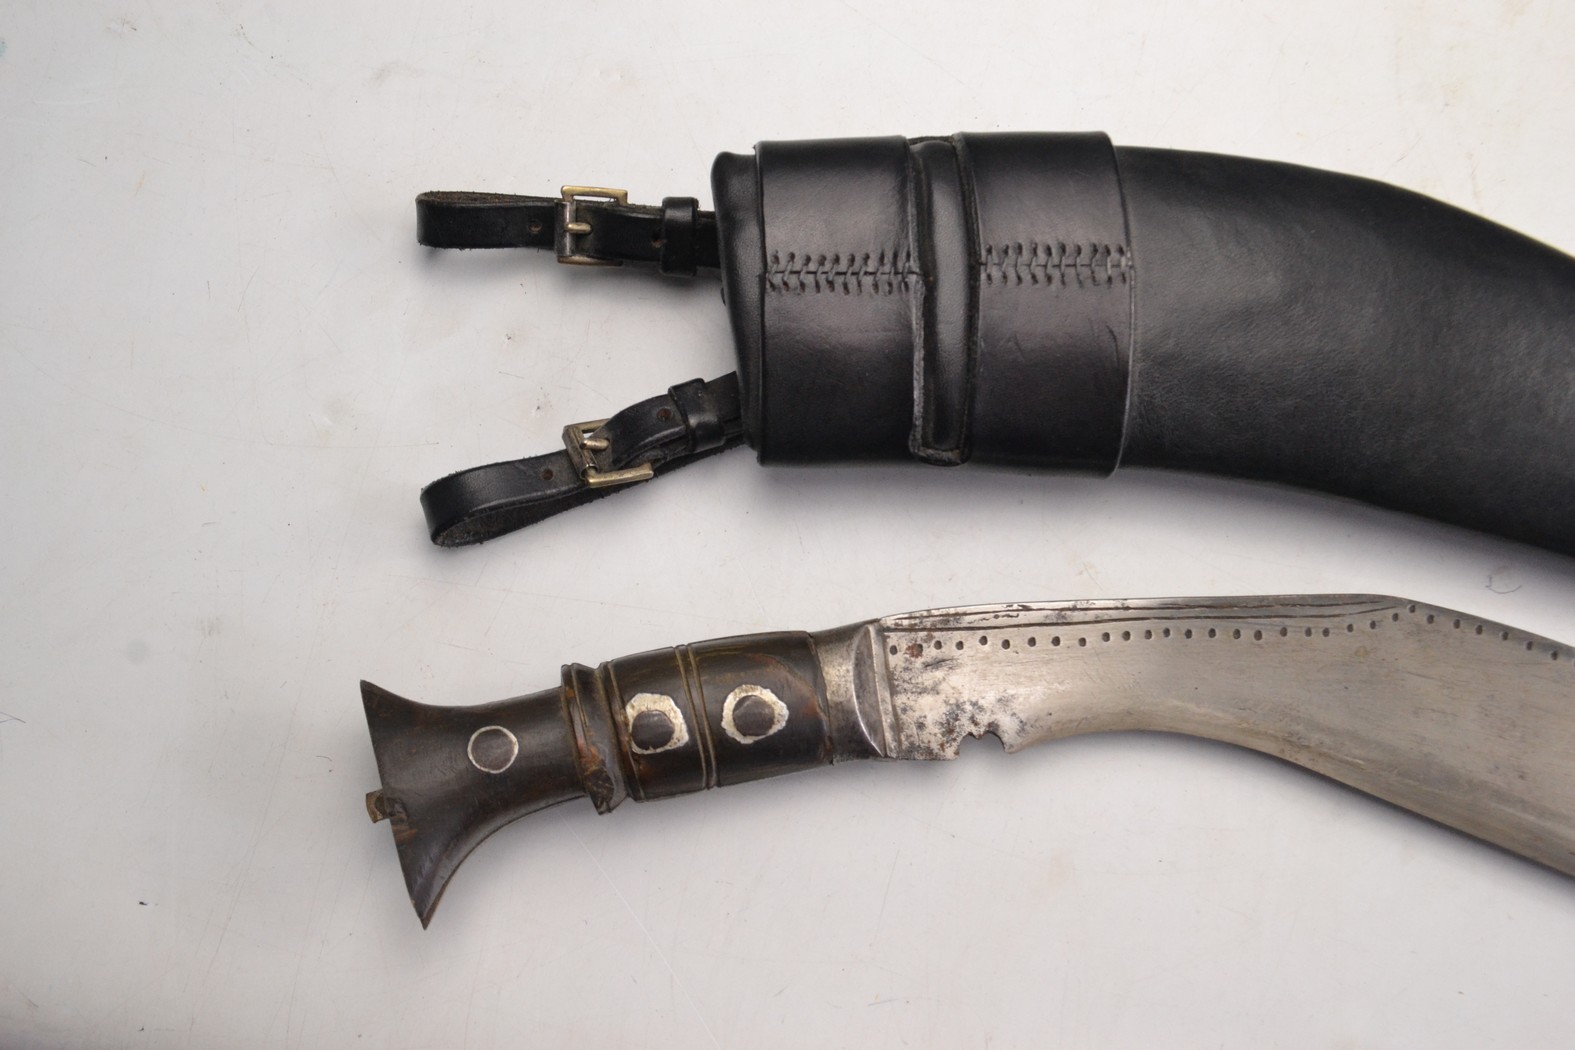 Gurkha Kukri knife with black leather sheath, blade length 30cm approx. - Image 9 of 10